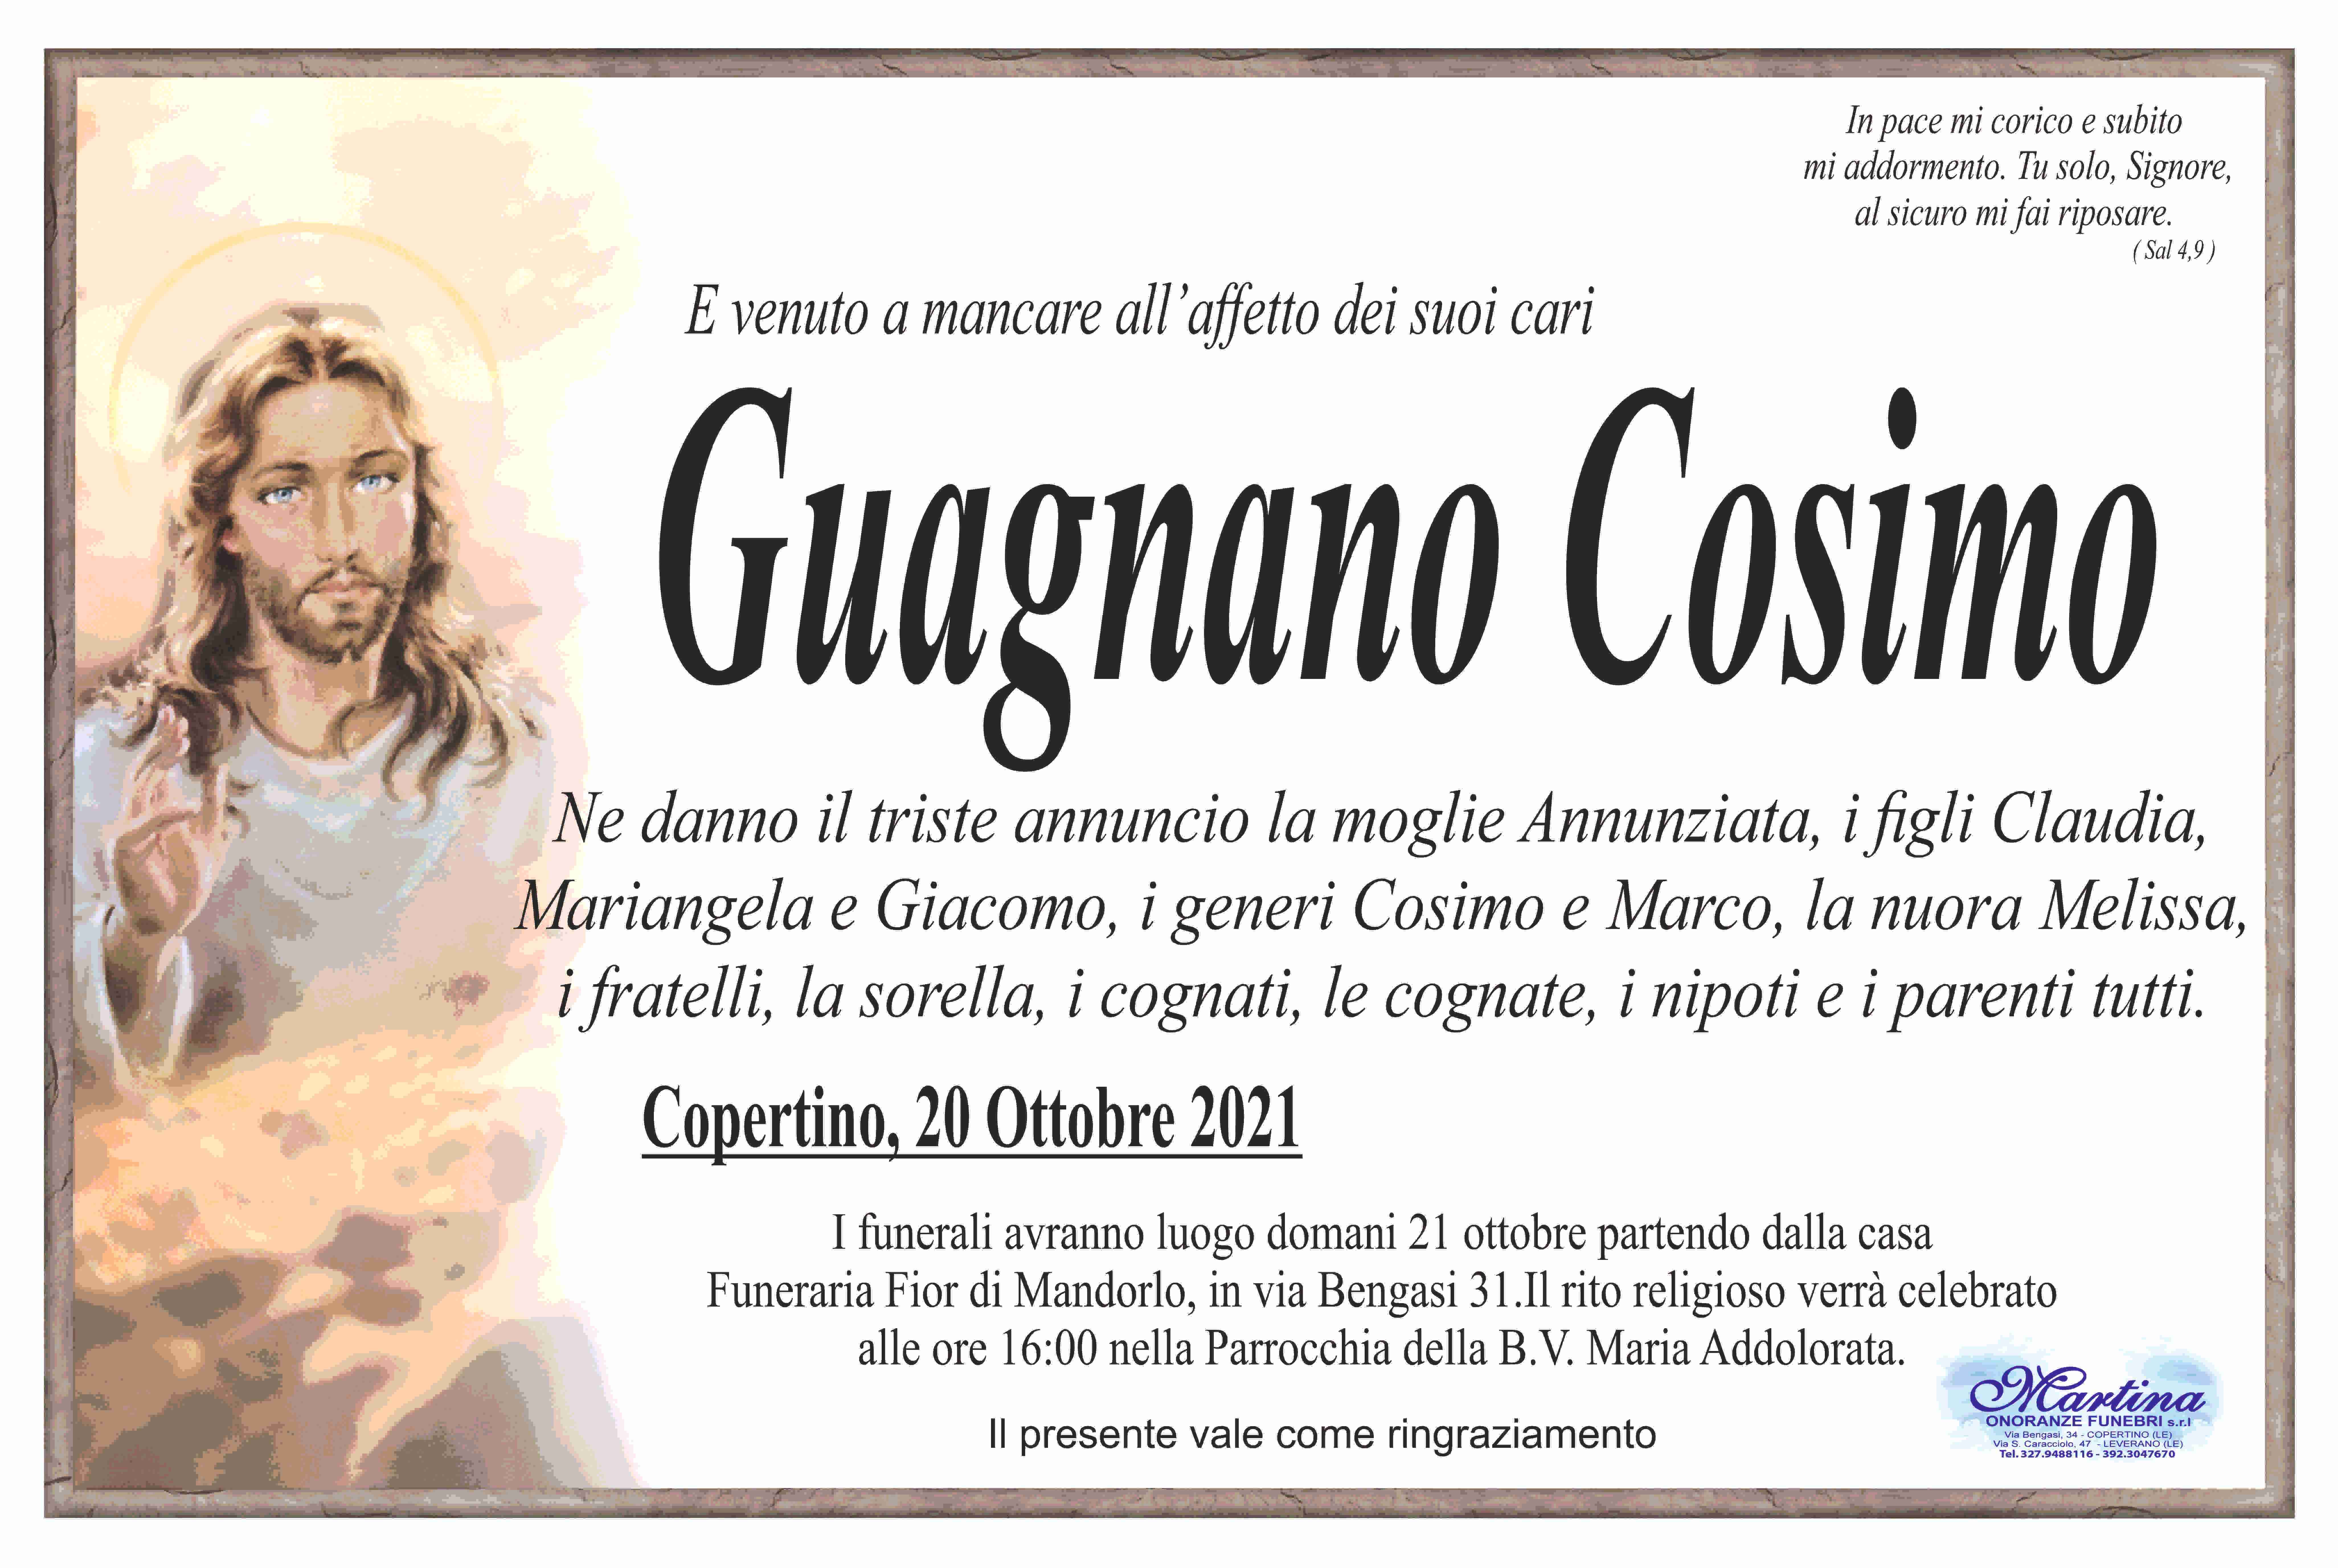 Cosimo Guagnano